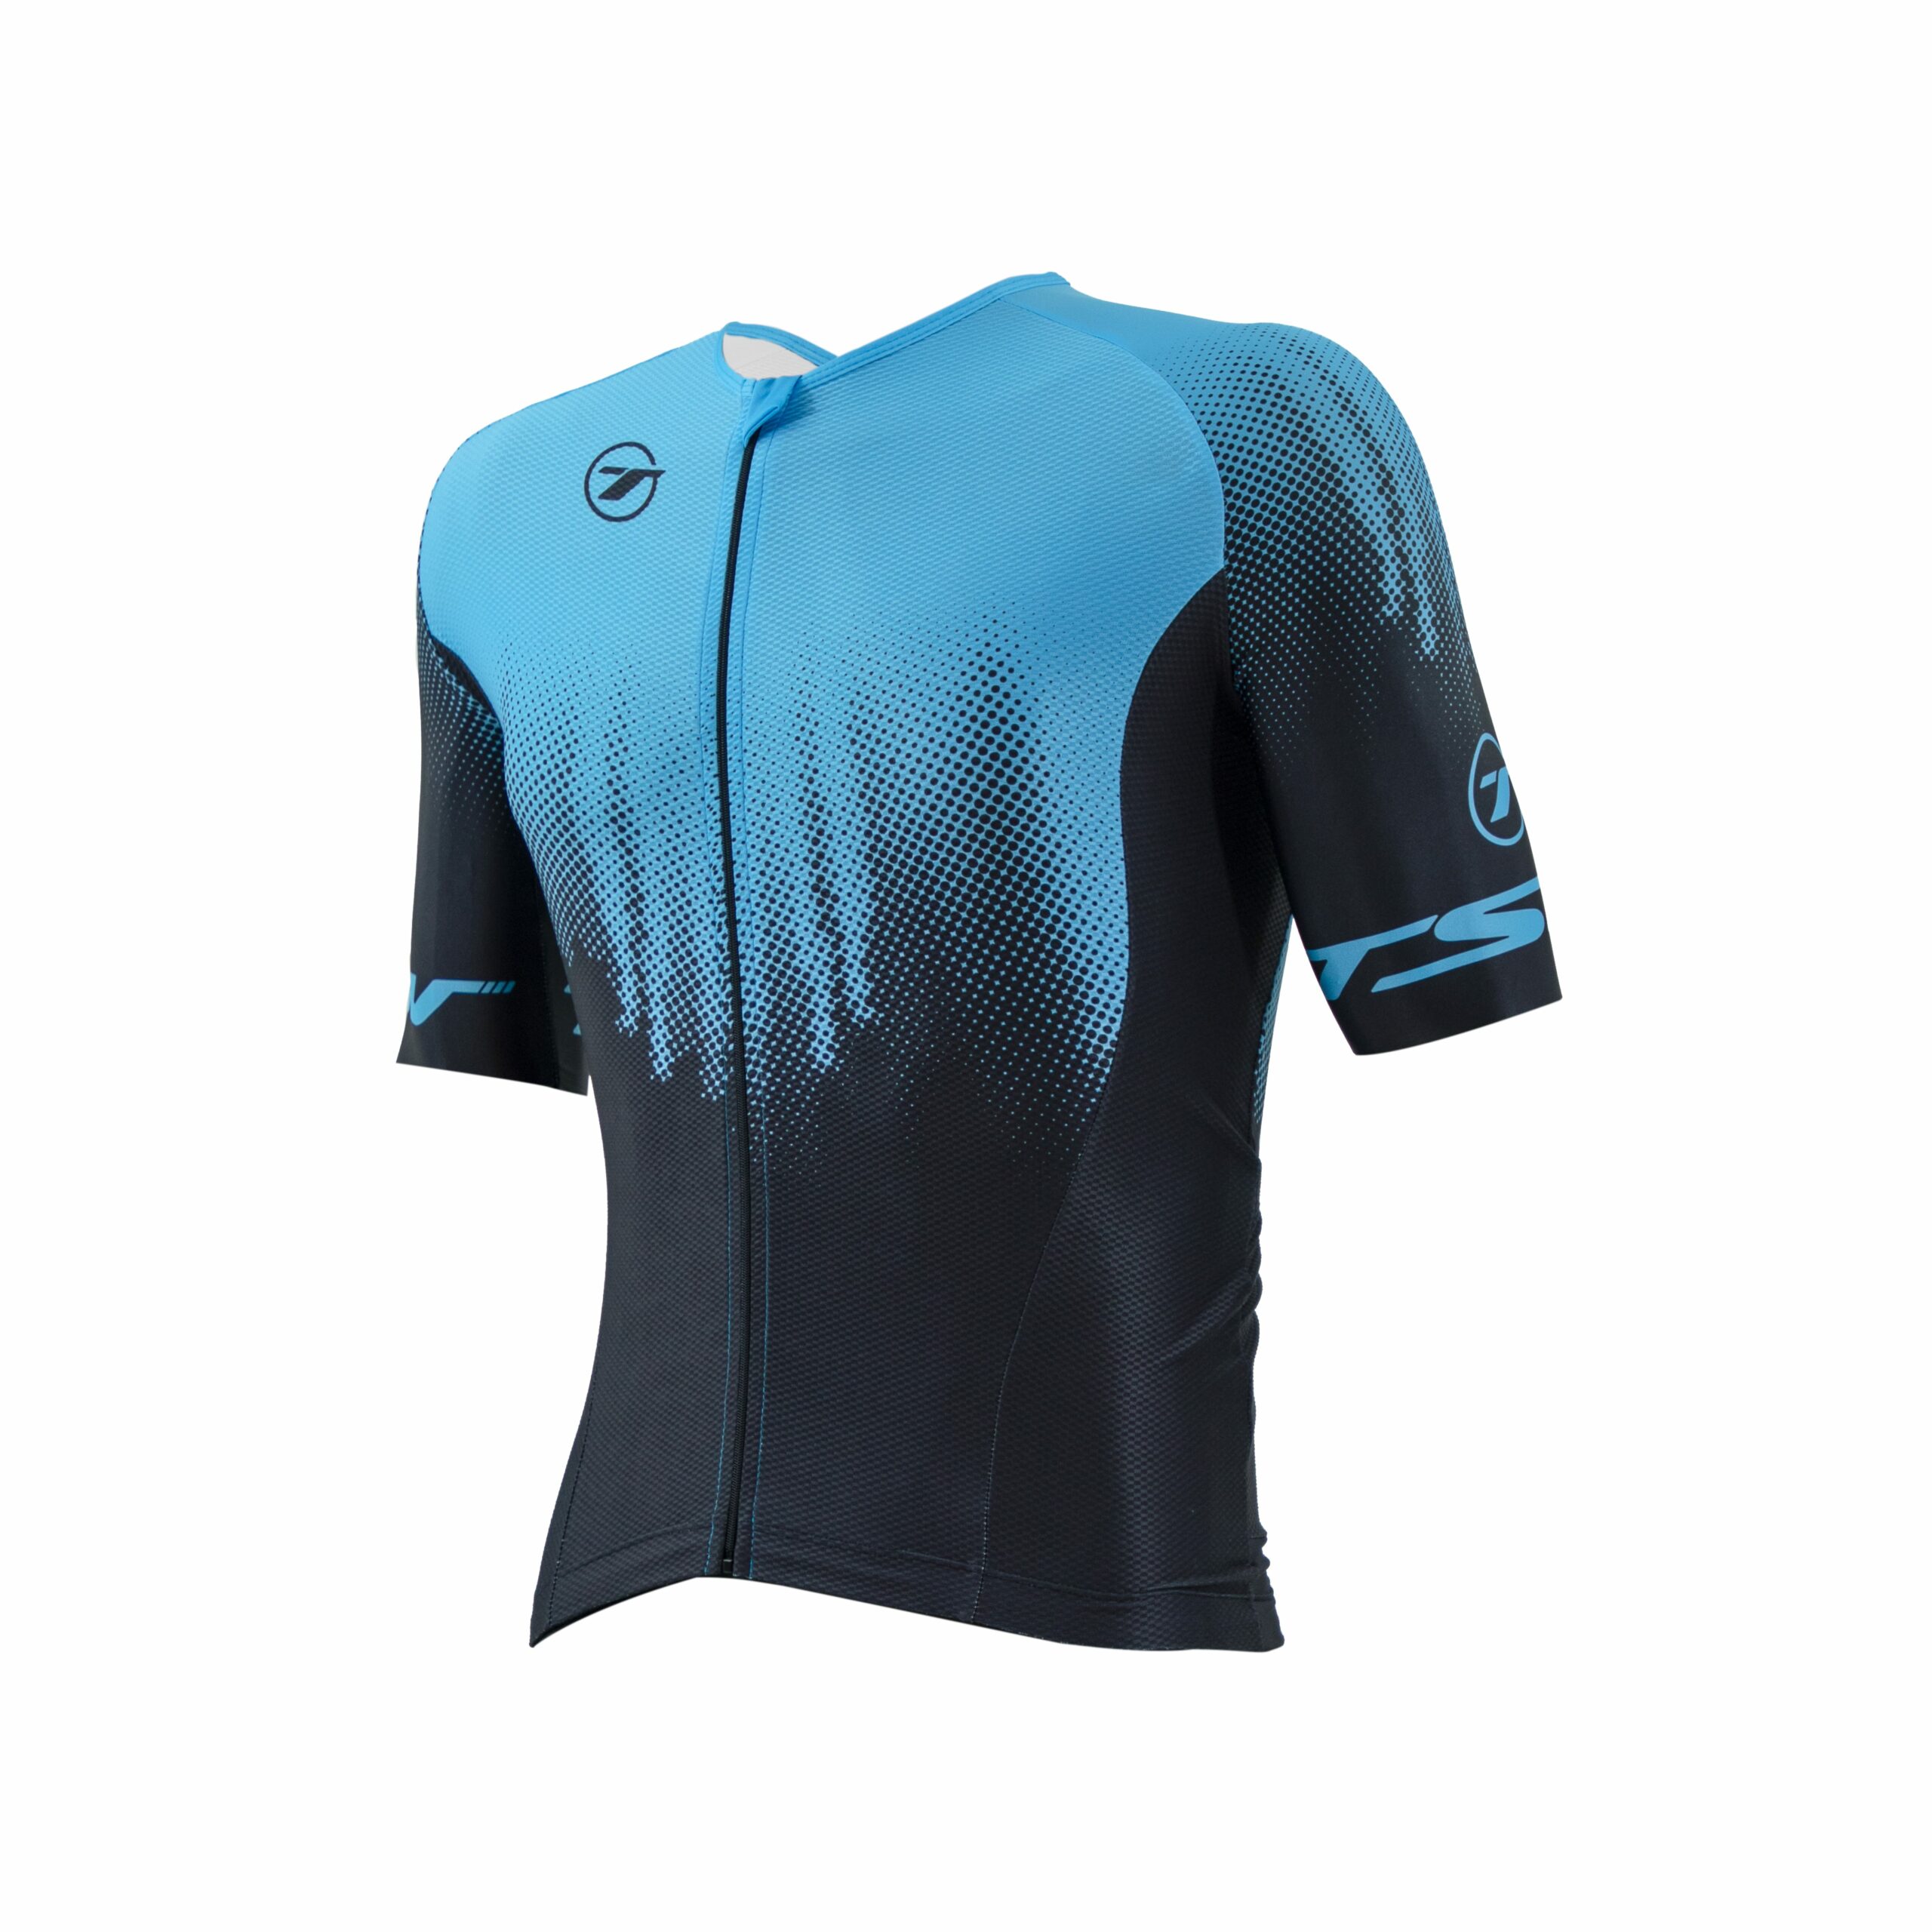 Camisa Elite Team Race - P, Azul/Preto